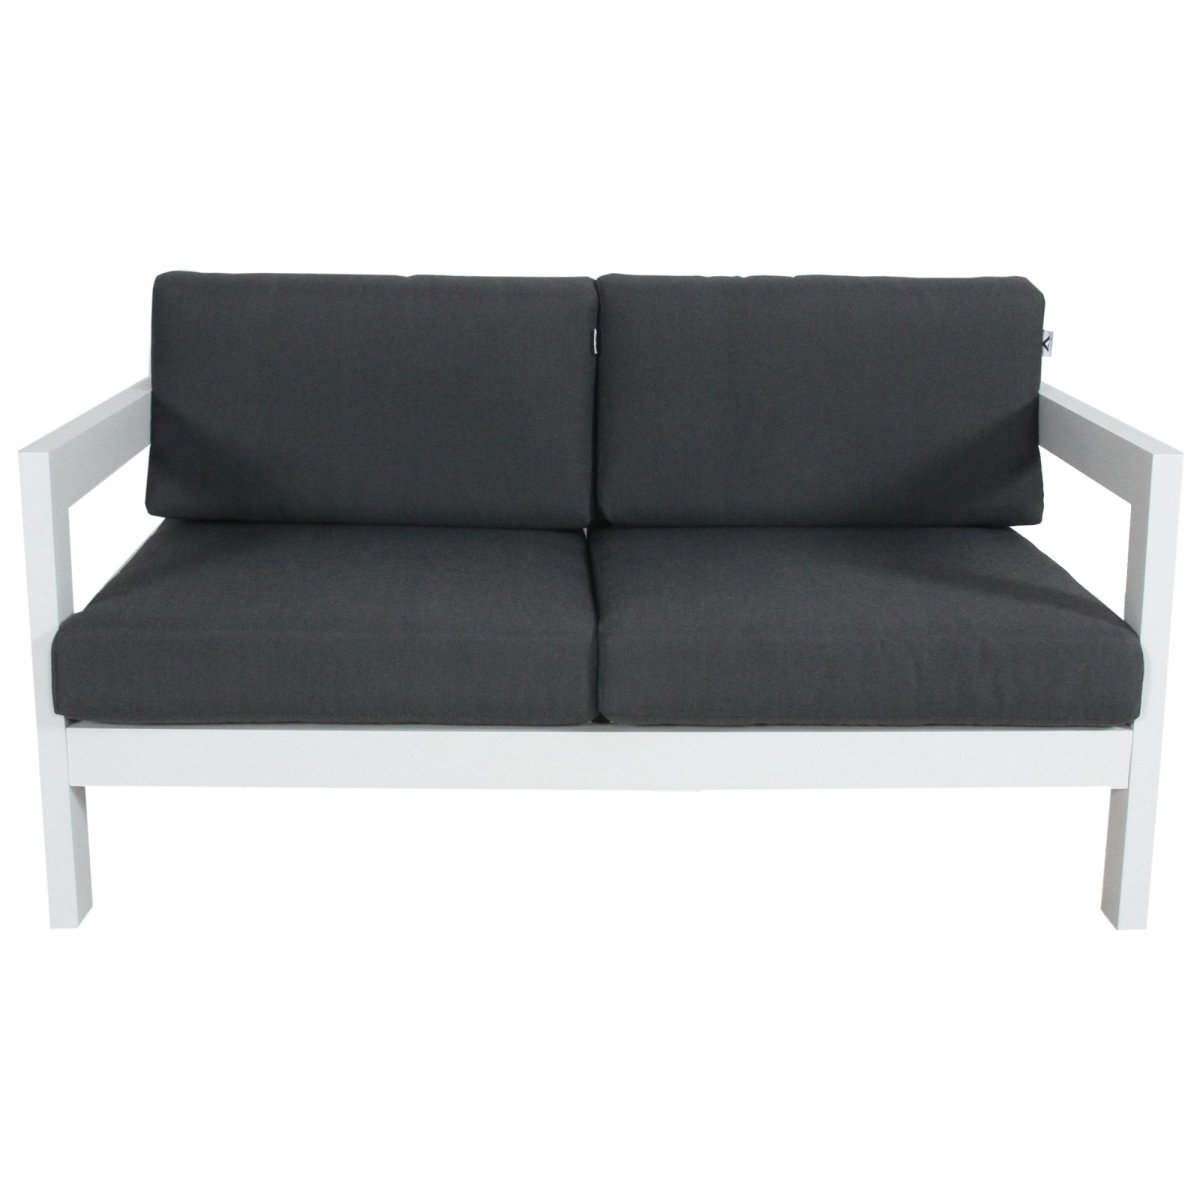 Outie 2 Seater Outdoor Sofa Lounge Aluminium Frame White - Outdoorium